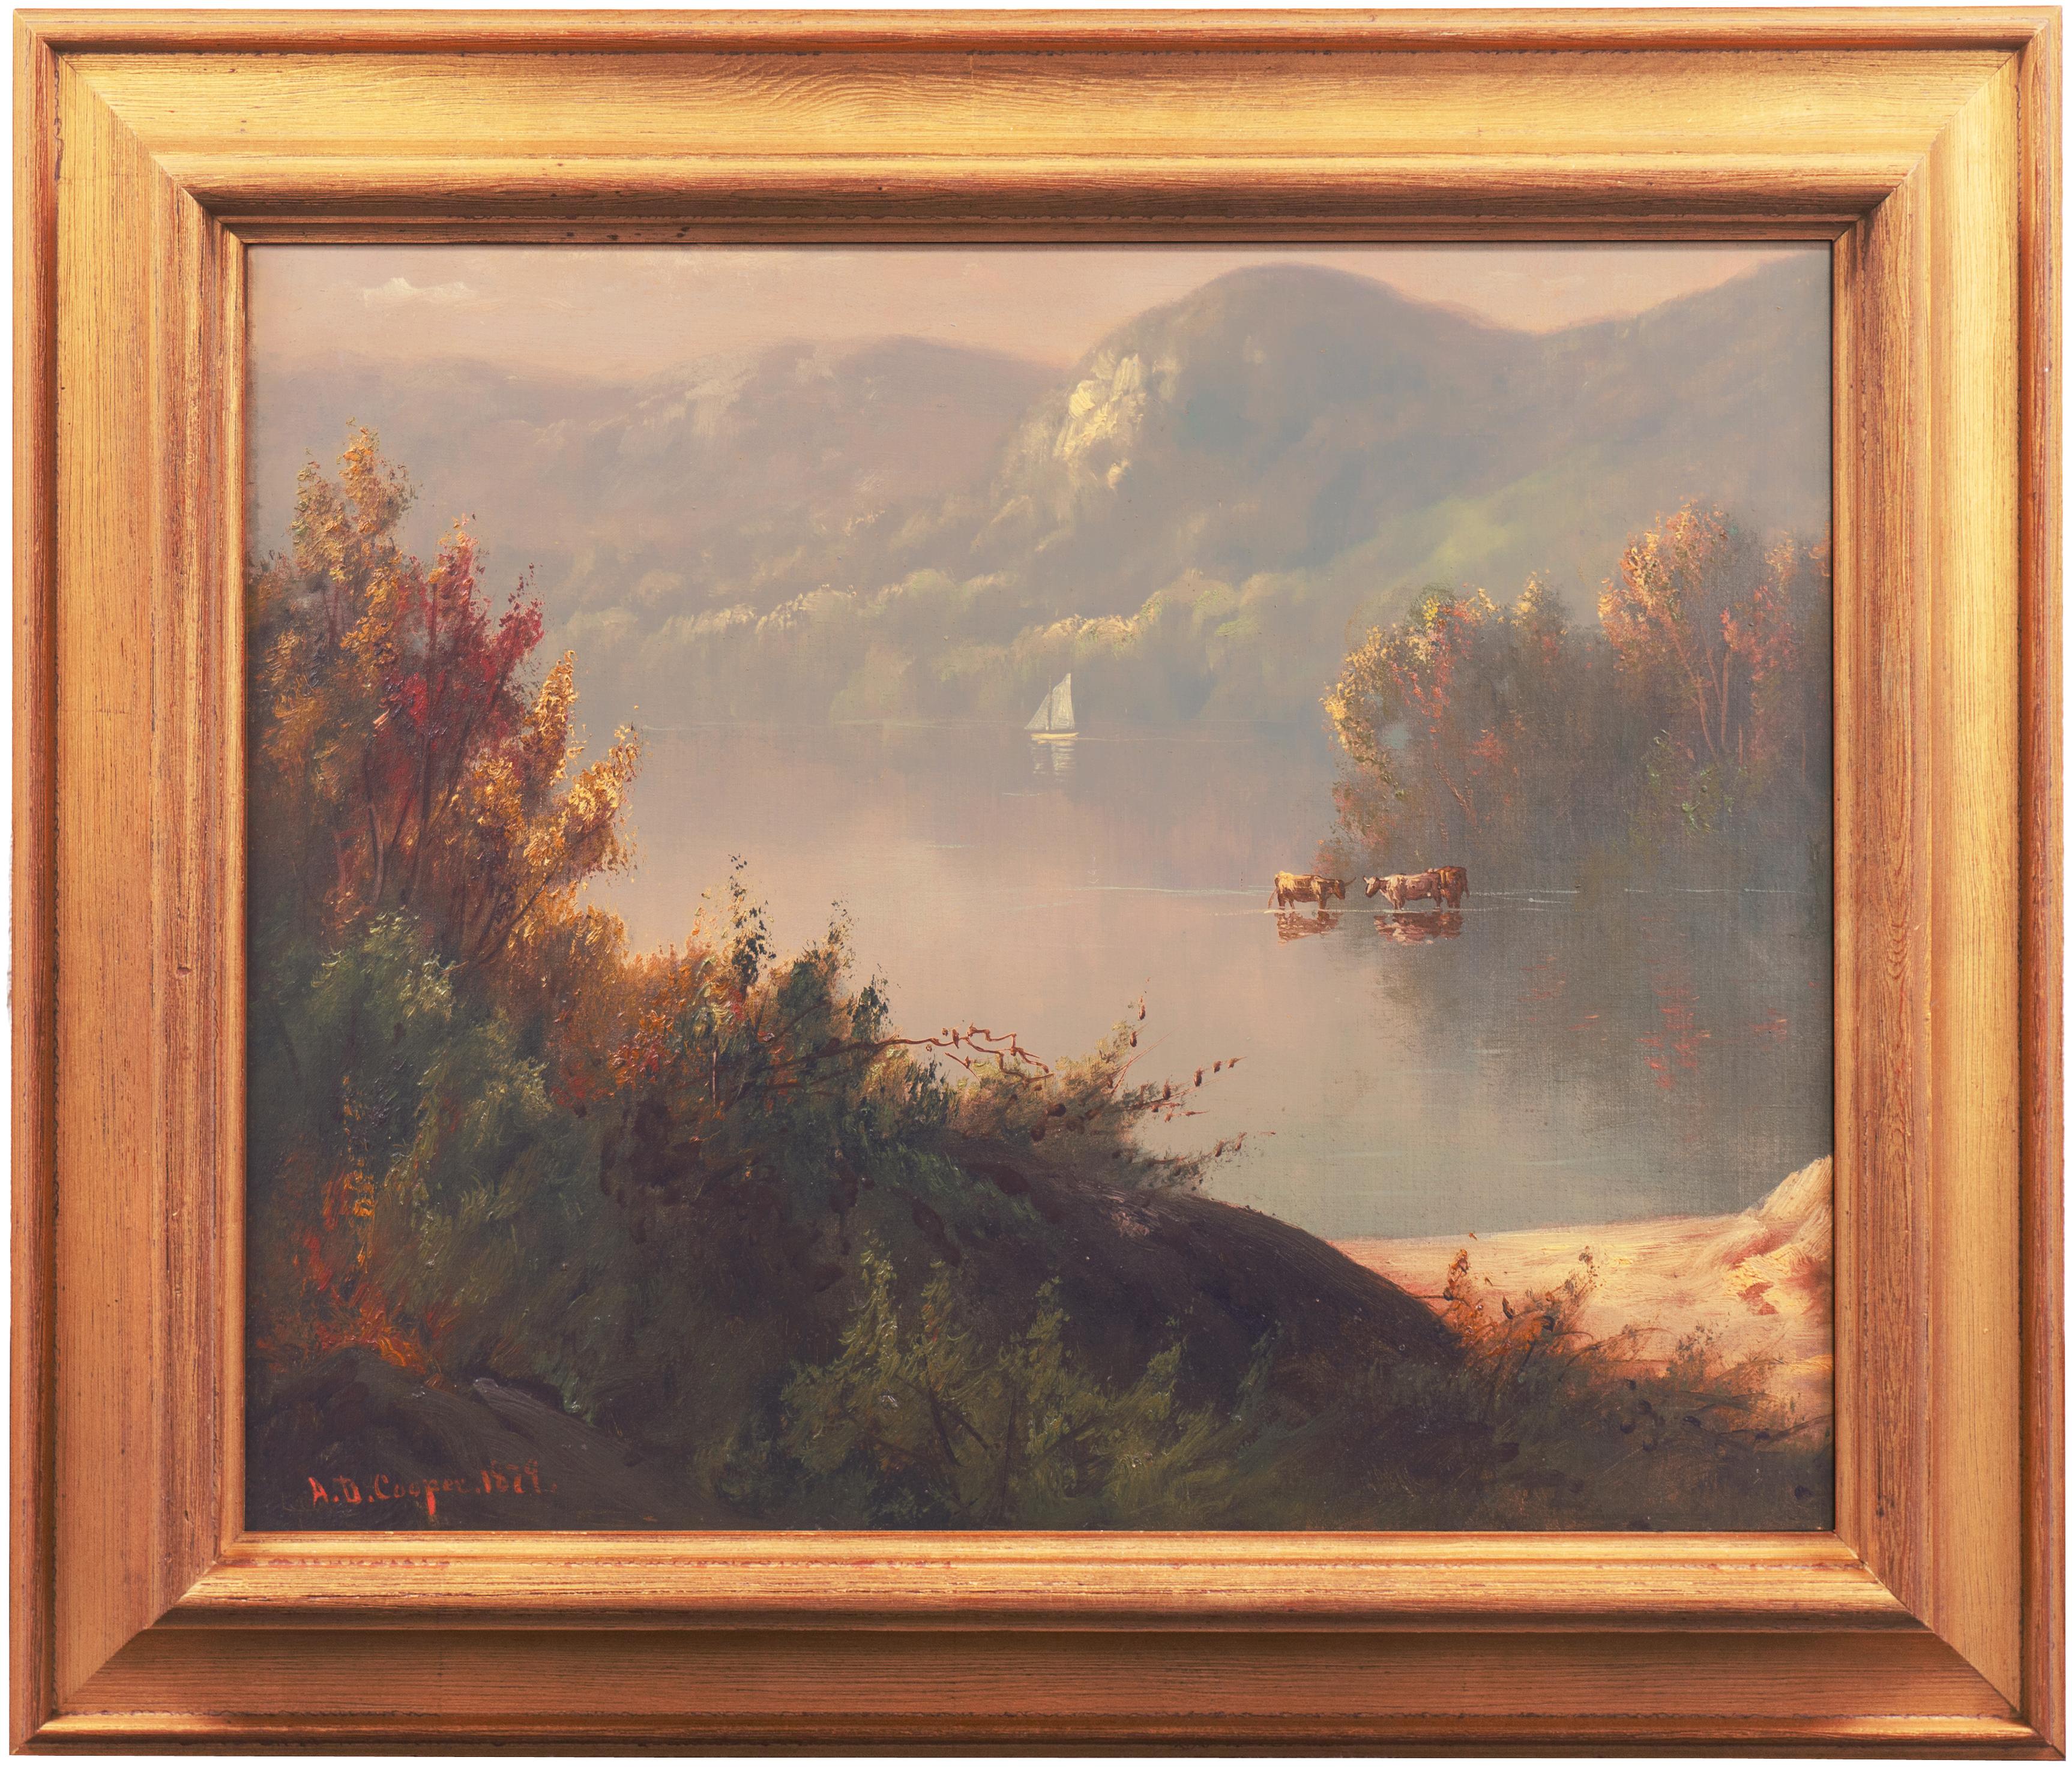 Astley David Middleton Cooper Landscape Painting - 'Lake Landscape, Evening', San Francisco, Leland Stanford, Washington University